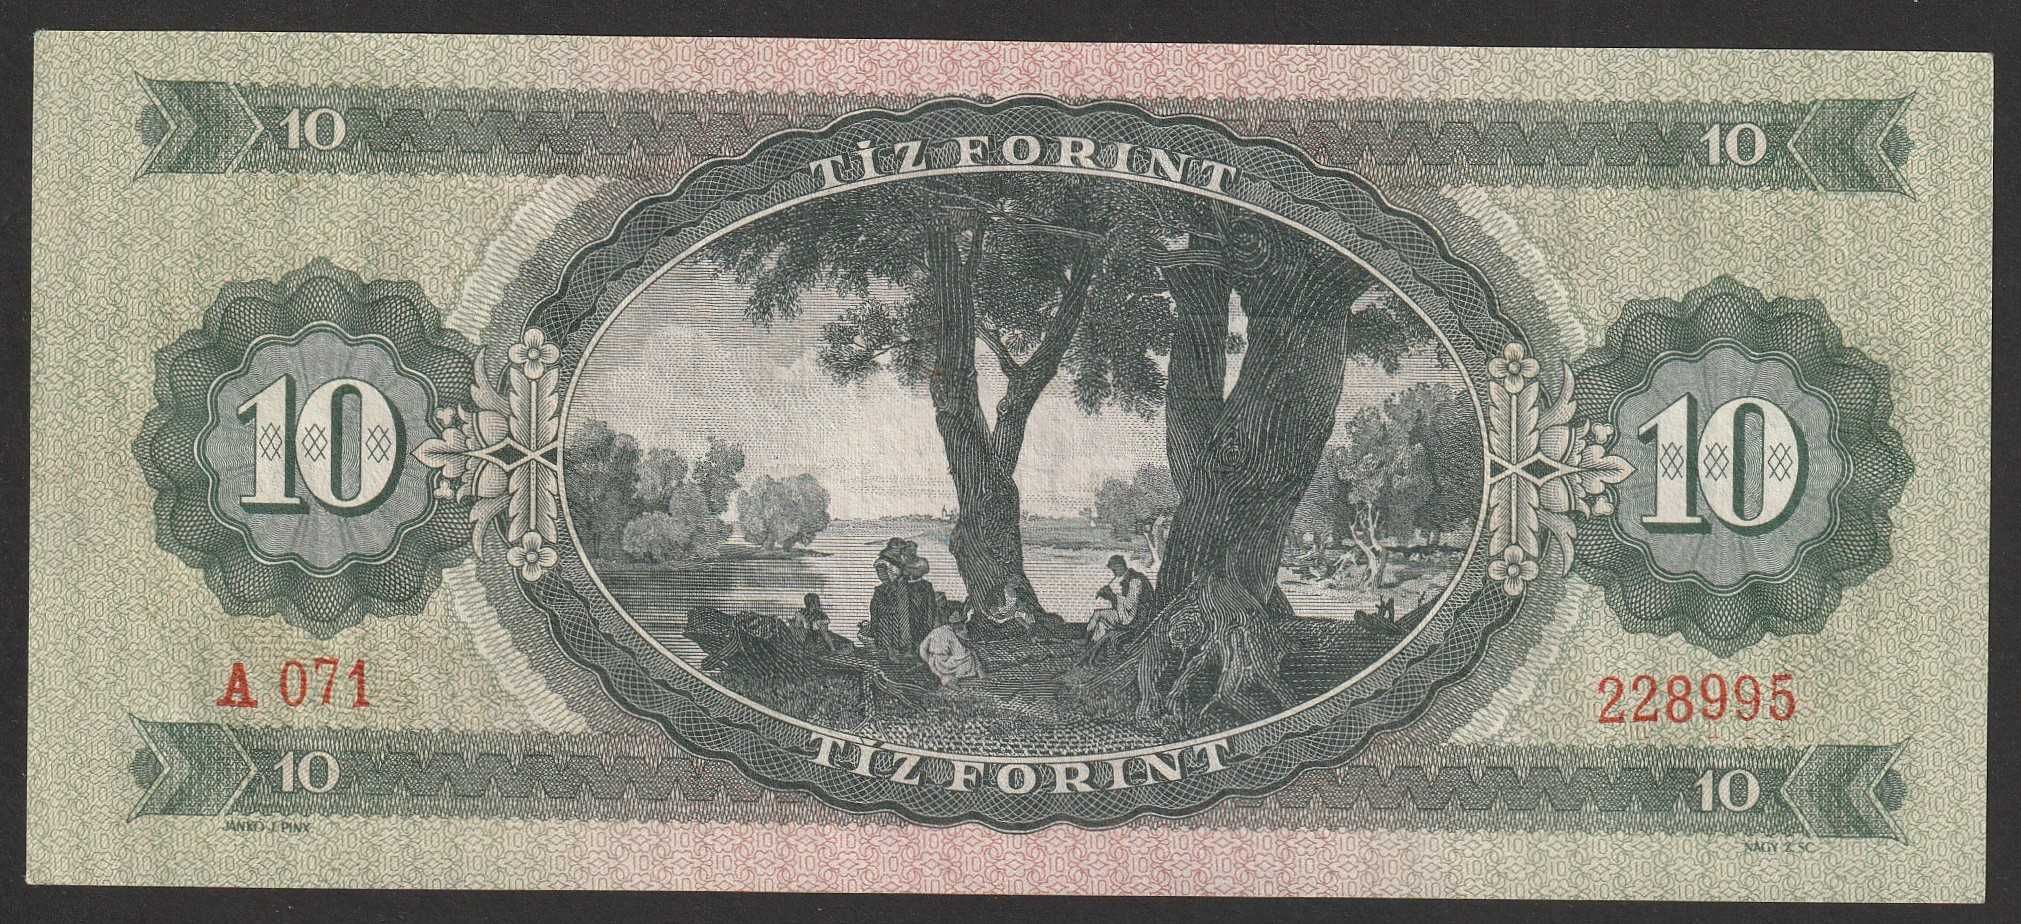 Węgry 10 forintów 1962 - A071 - Sandor Petofi - stan 1/2